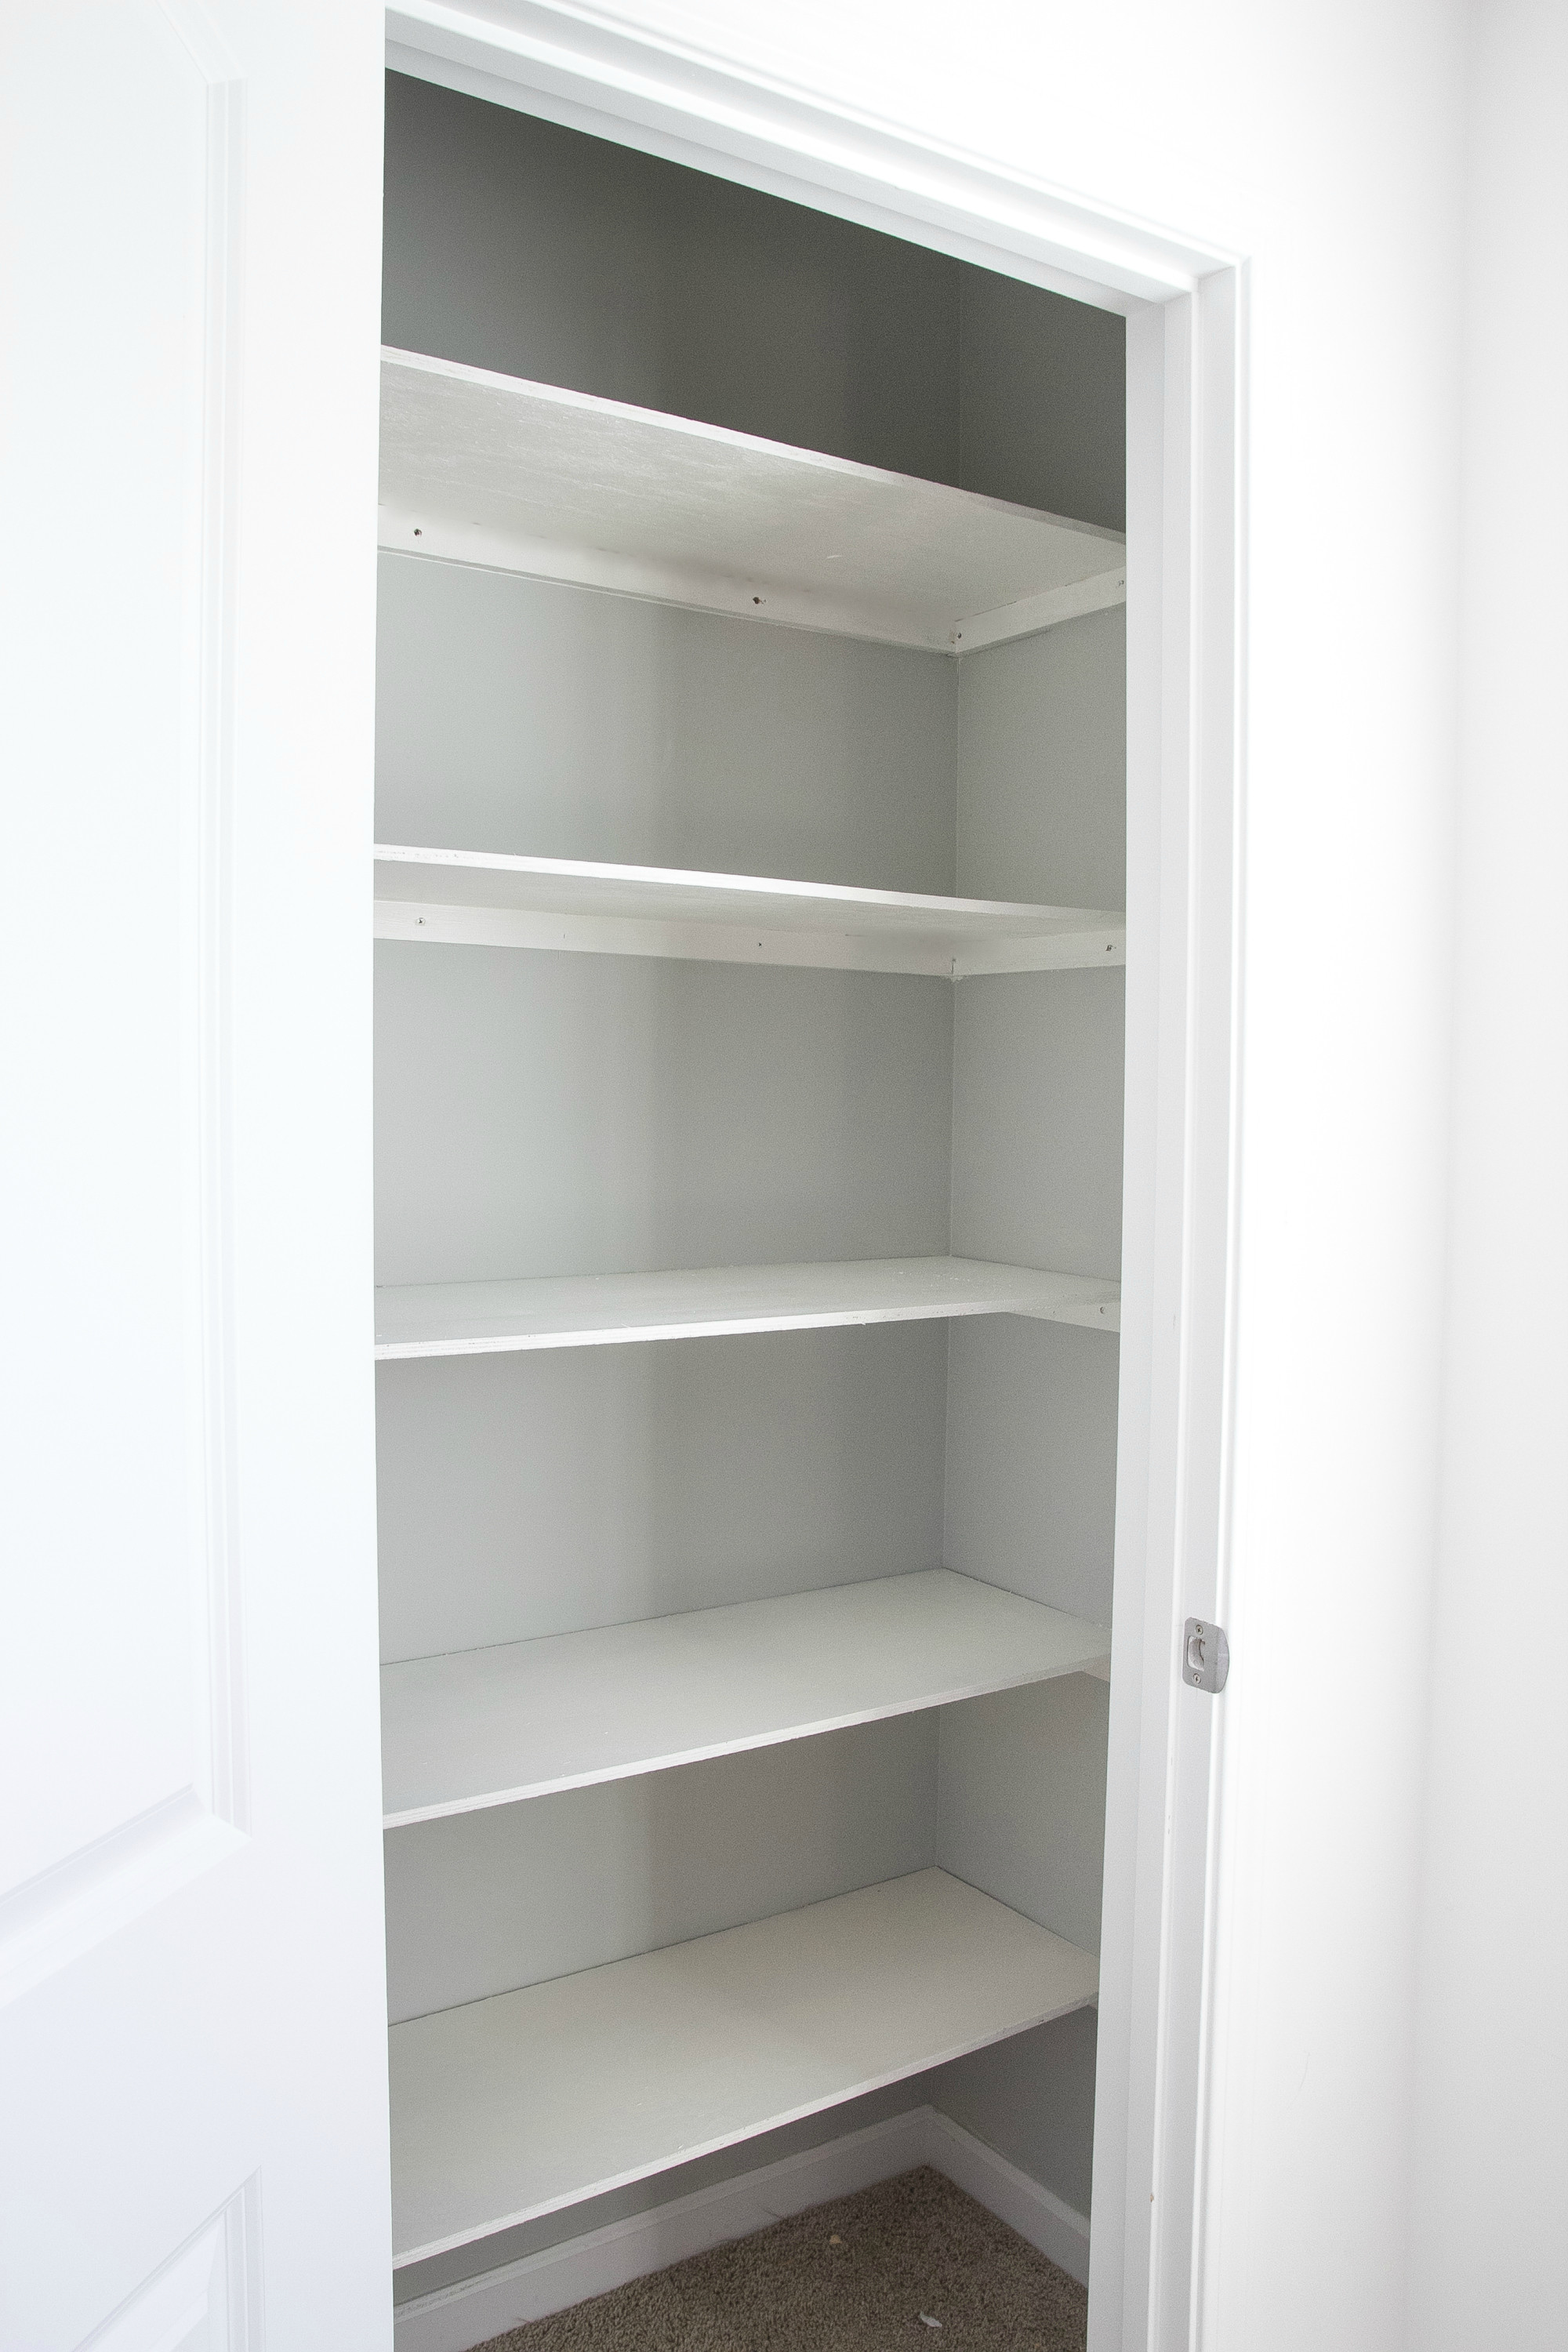 Best ideas about DIY Closet Shelves
. Save or Pin Basic DIY Closet Shelving Now.